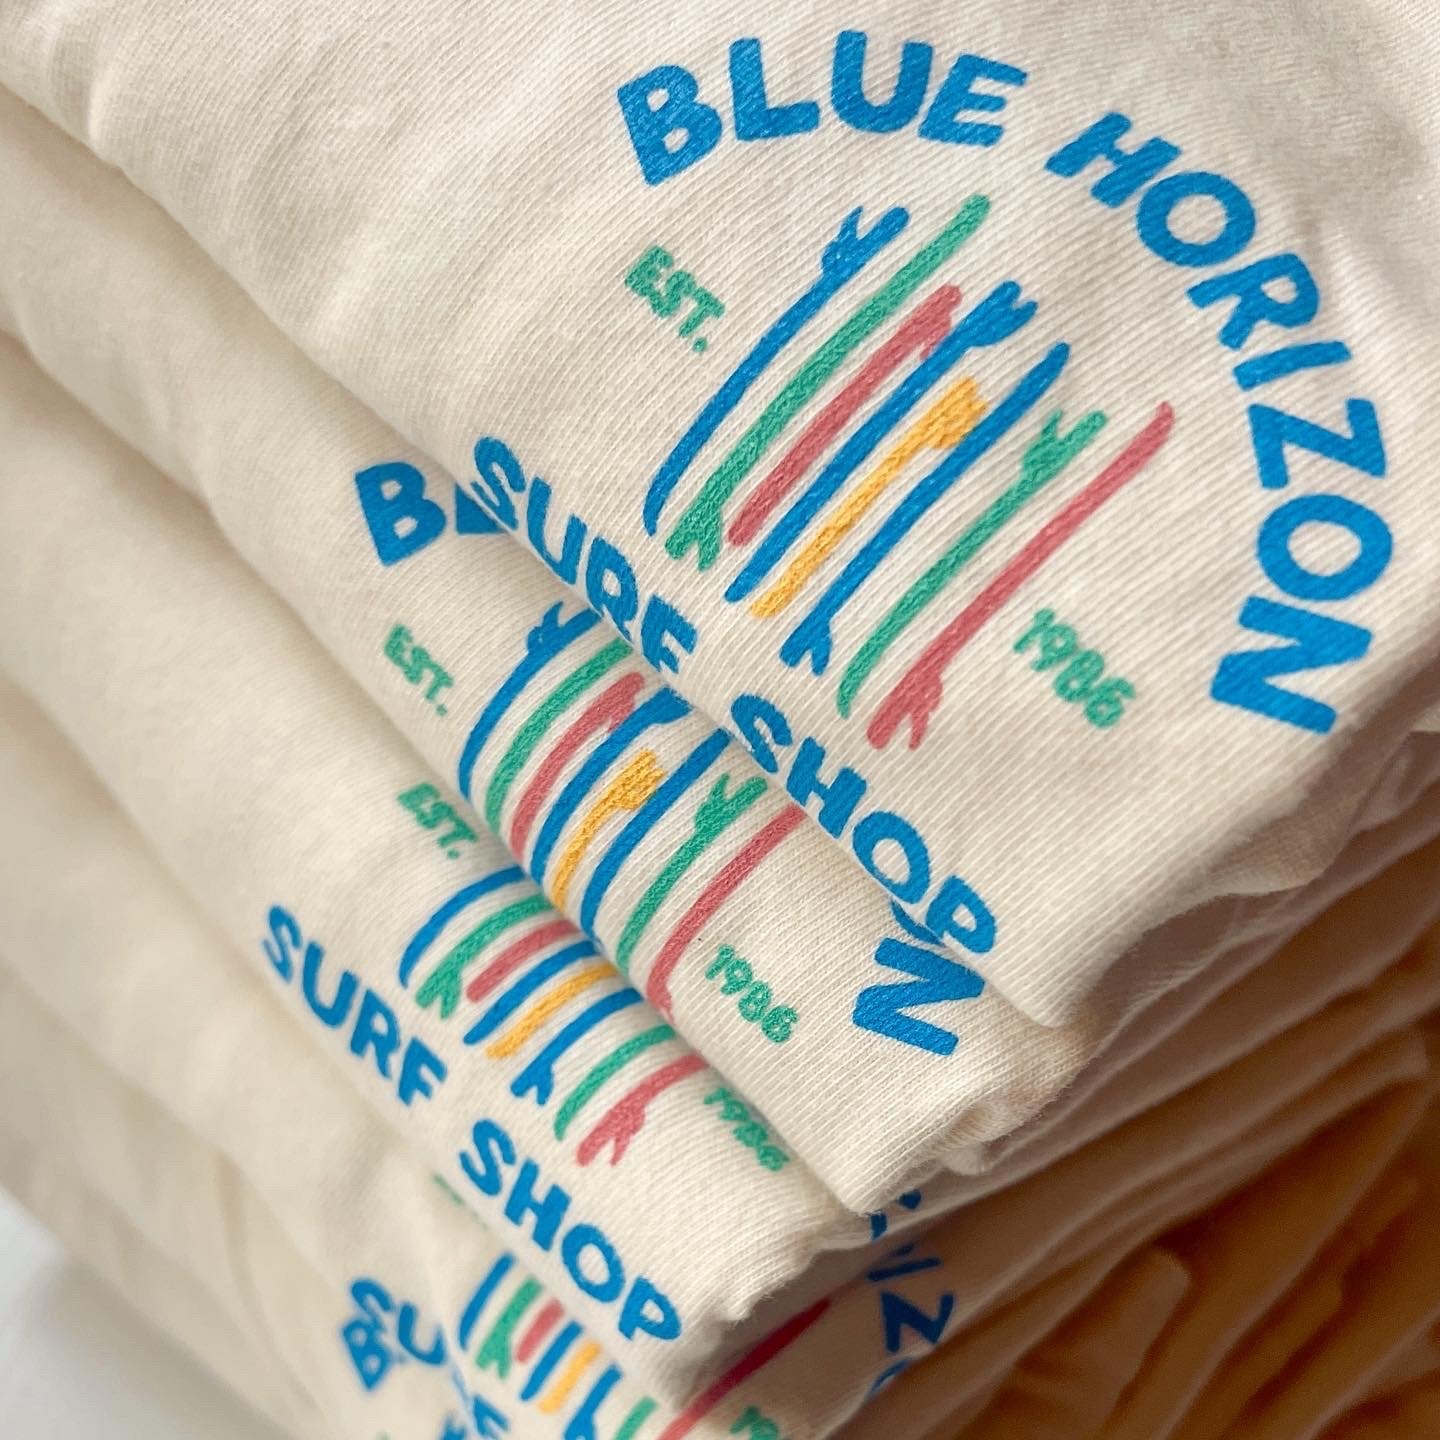 Blue Horizon Surf Shop Long Sleeve - Alex Blom Creates